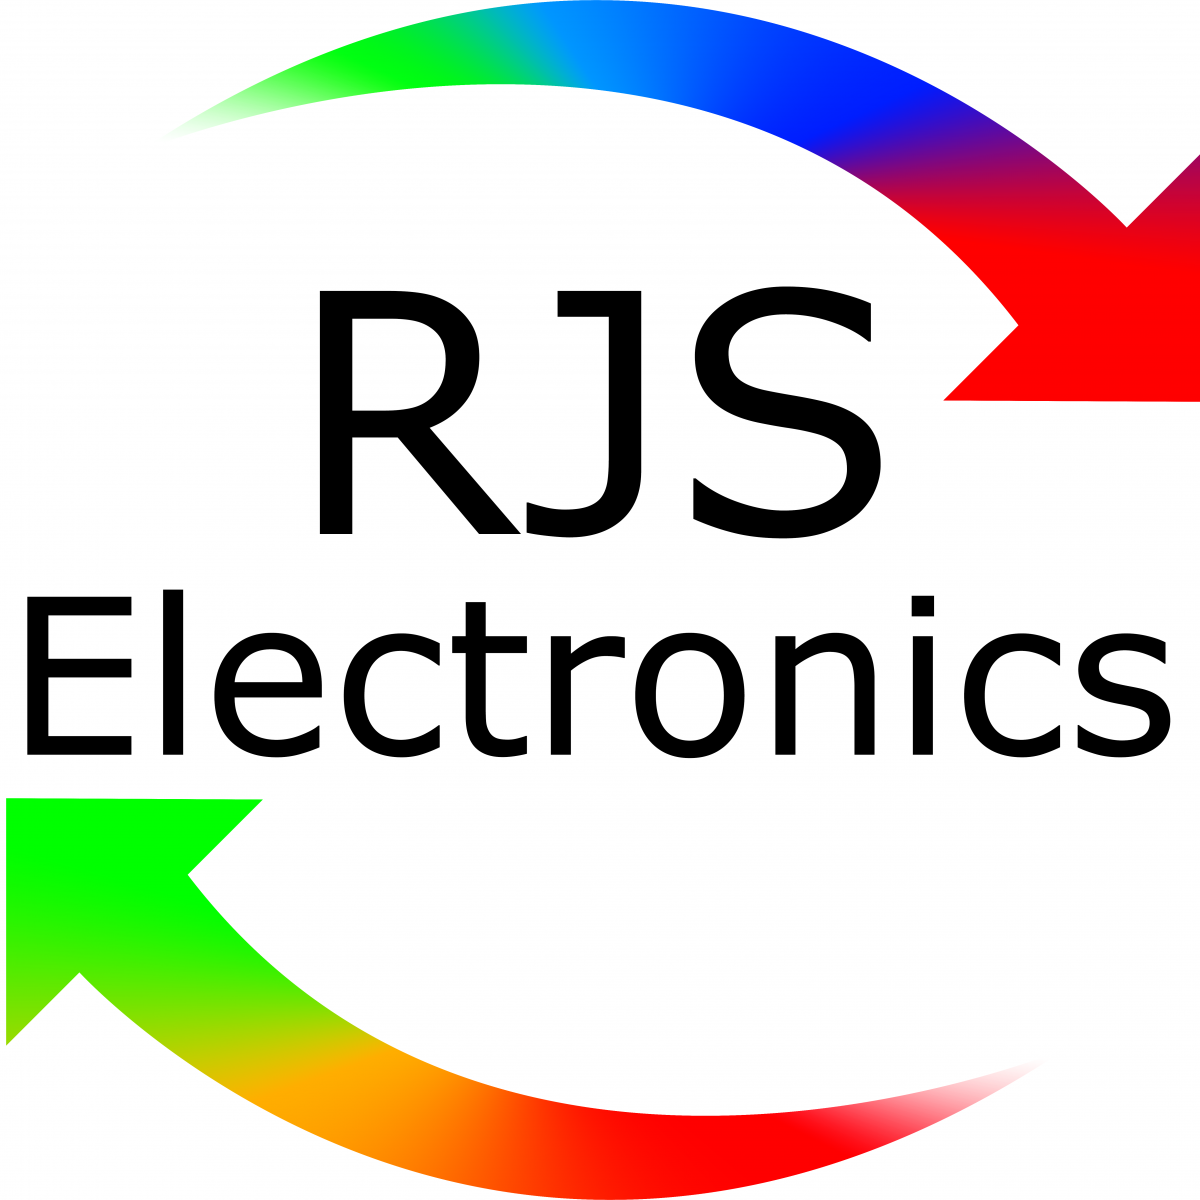 RJS Electronics Ltd, Logo, +44 (0)1234 213600, sales@rjselectronics.com, www.rjselectronics.com, anti-vandal switches, switches, electro-mechanical components